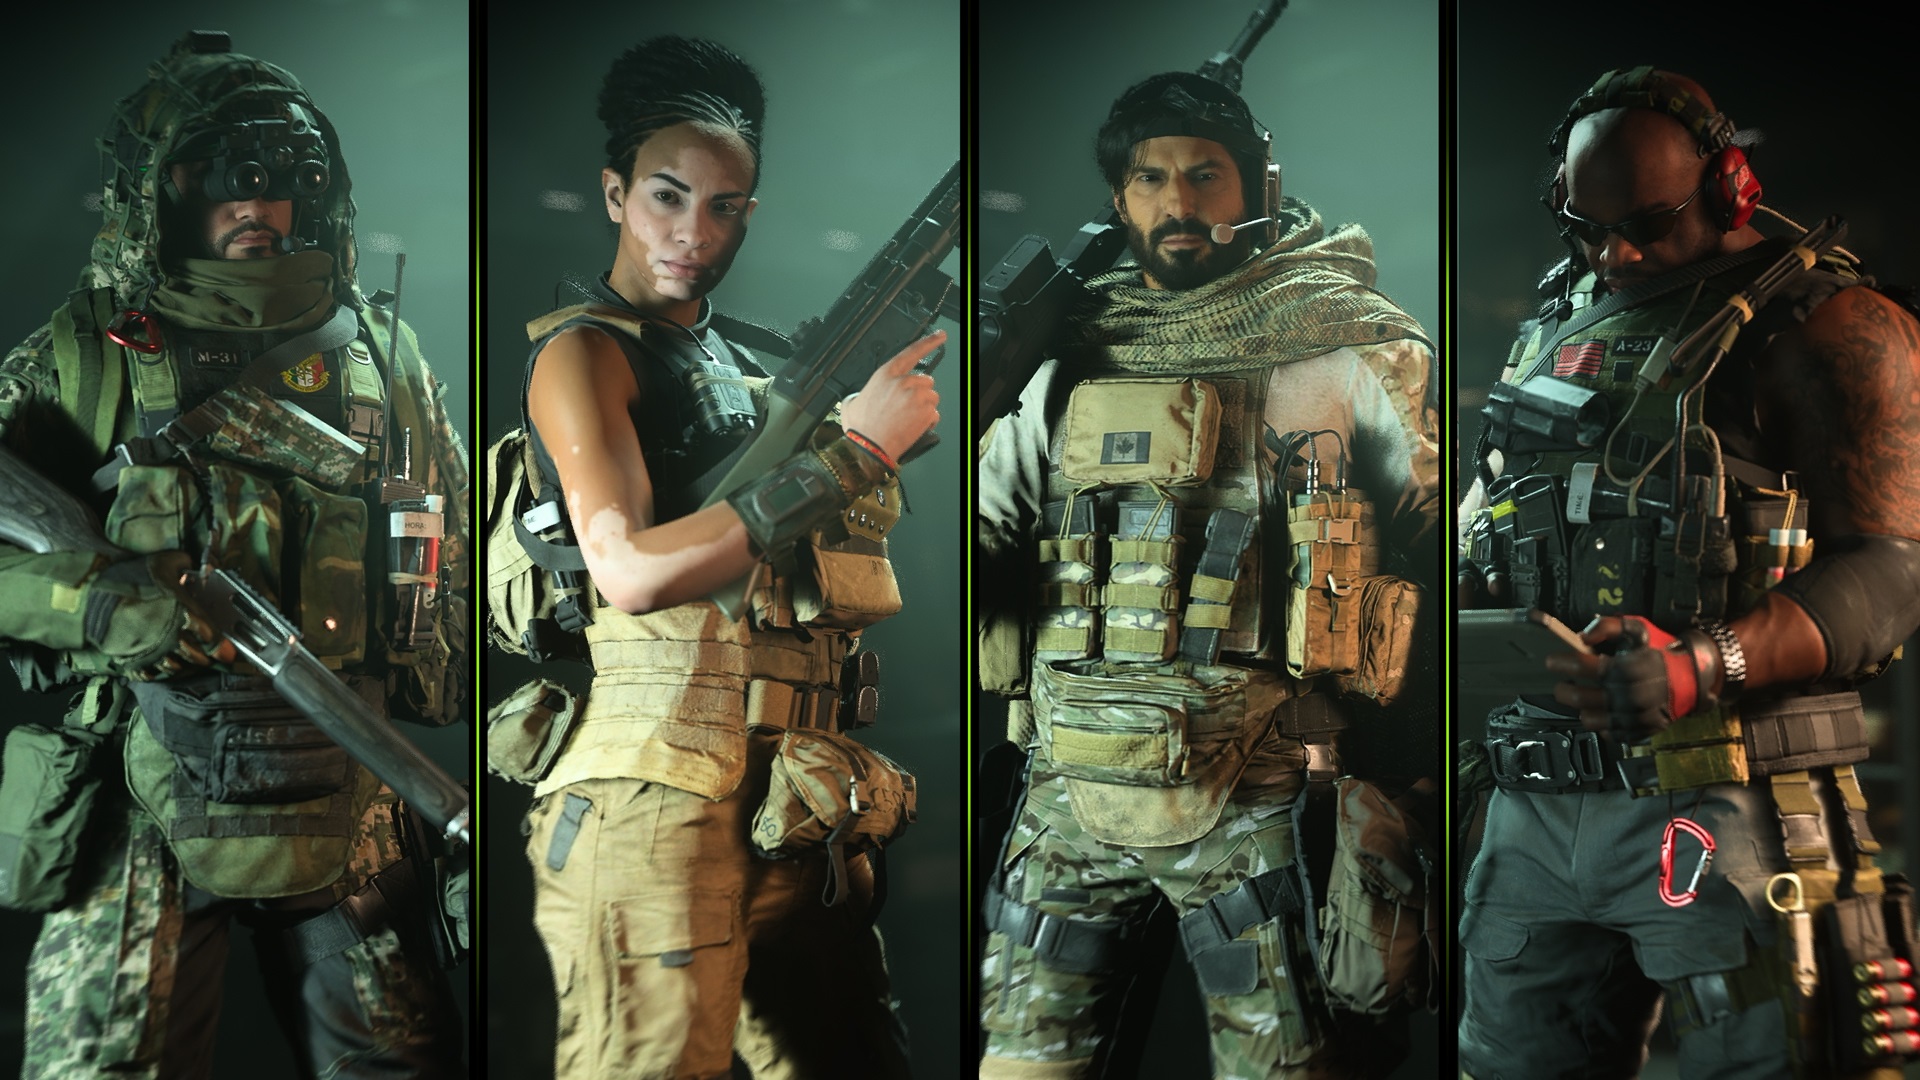 Modern Warfare 2 operators and factions